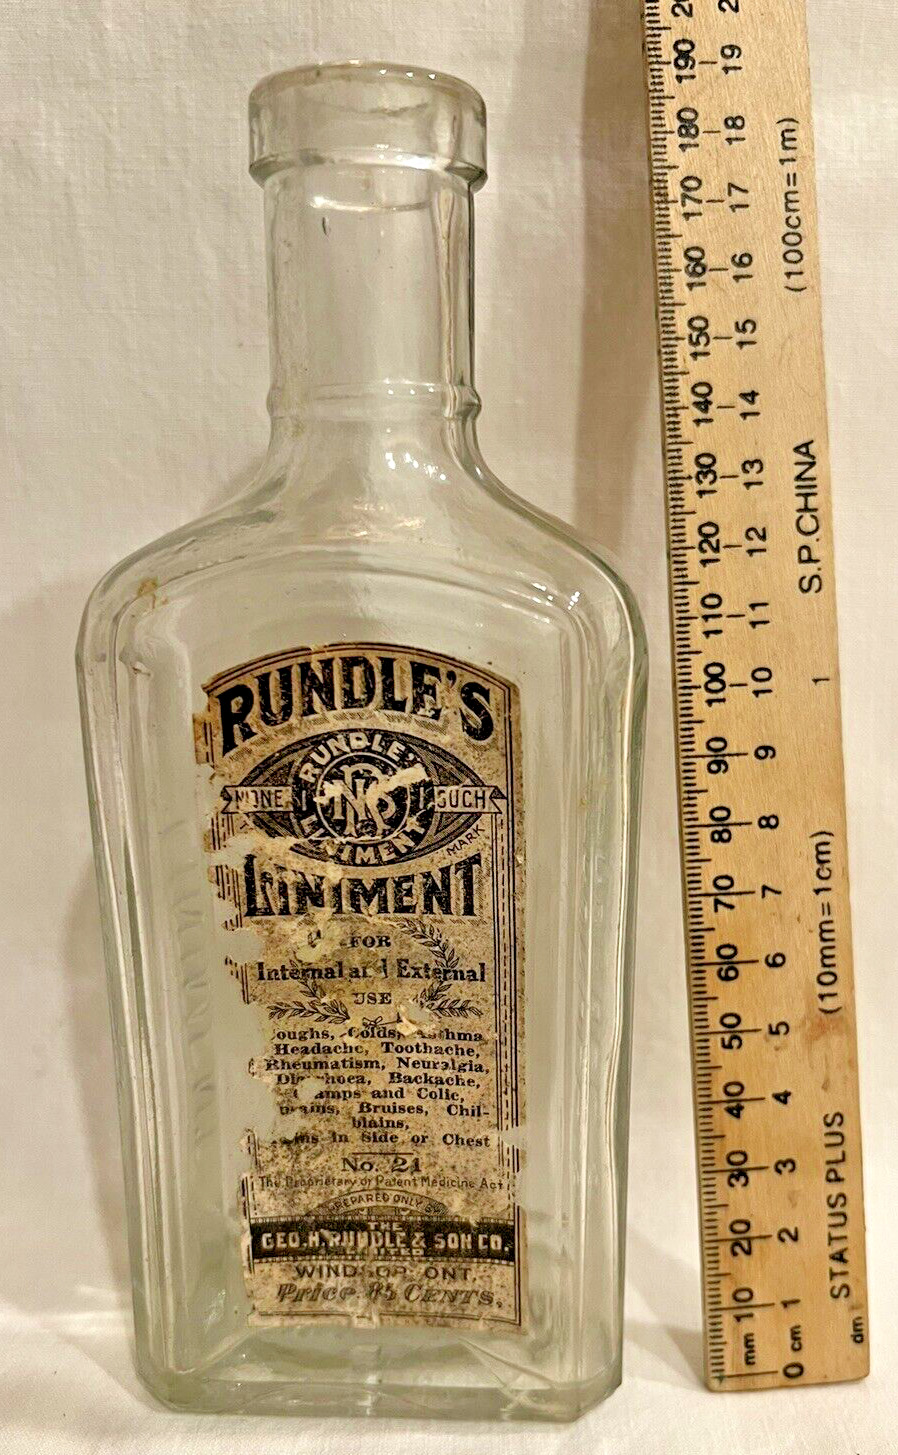 Vintage Medicine NONE-SUCH RUNDLE’S LINIMENT Bottle - Windsor, Ontario, Canada